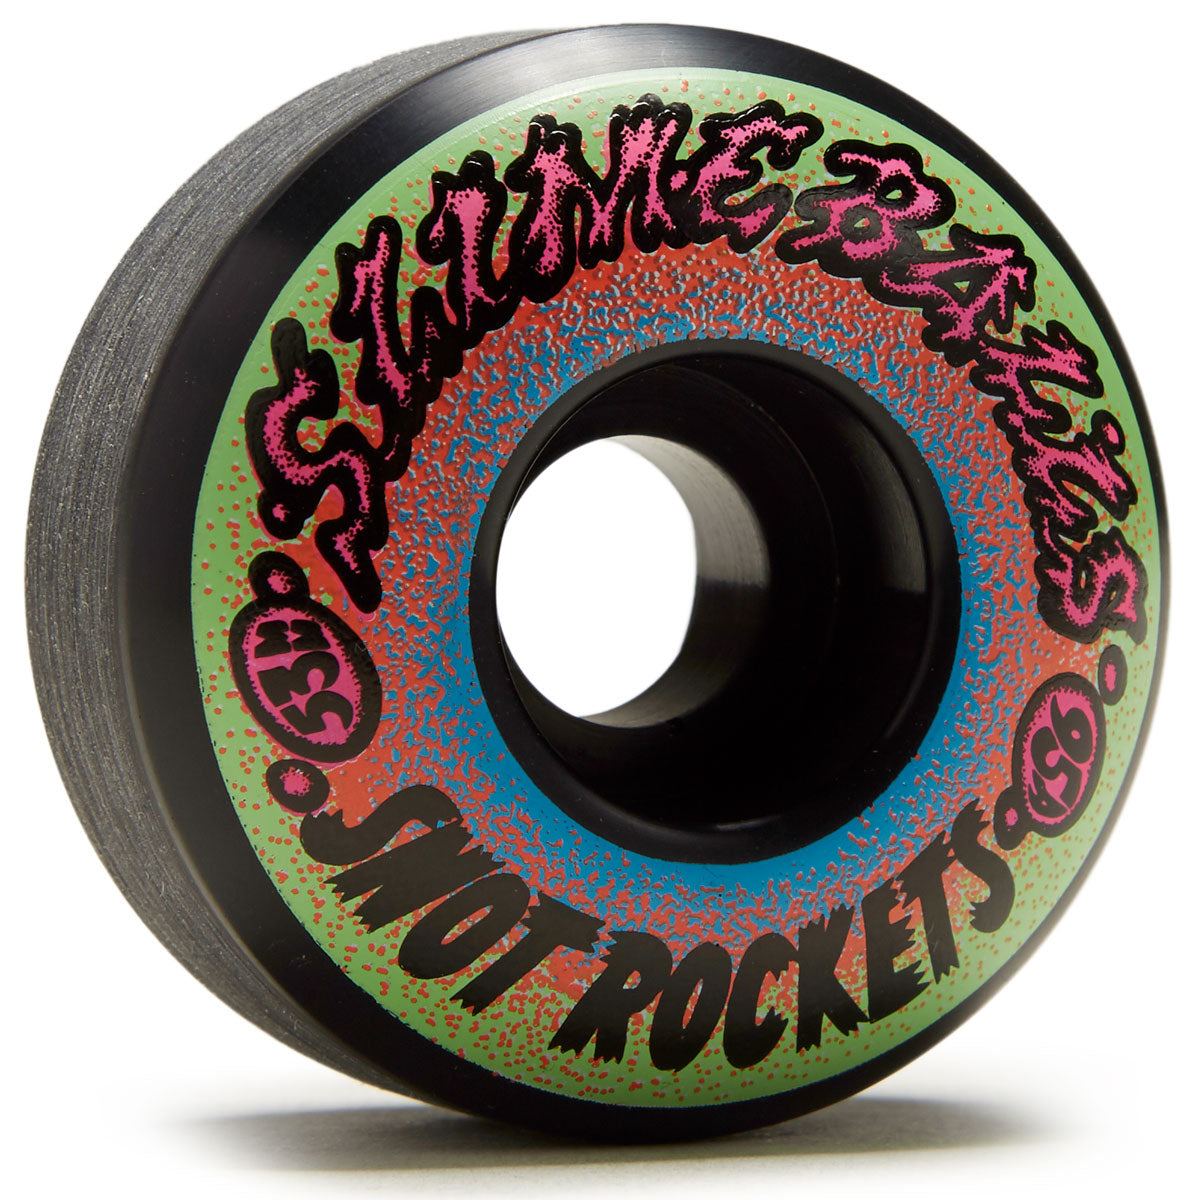 Slime Balls Snot Rockets 95a Skateboard Wheels - Black - 53mm image 1